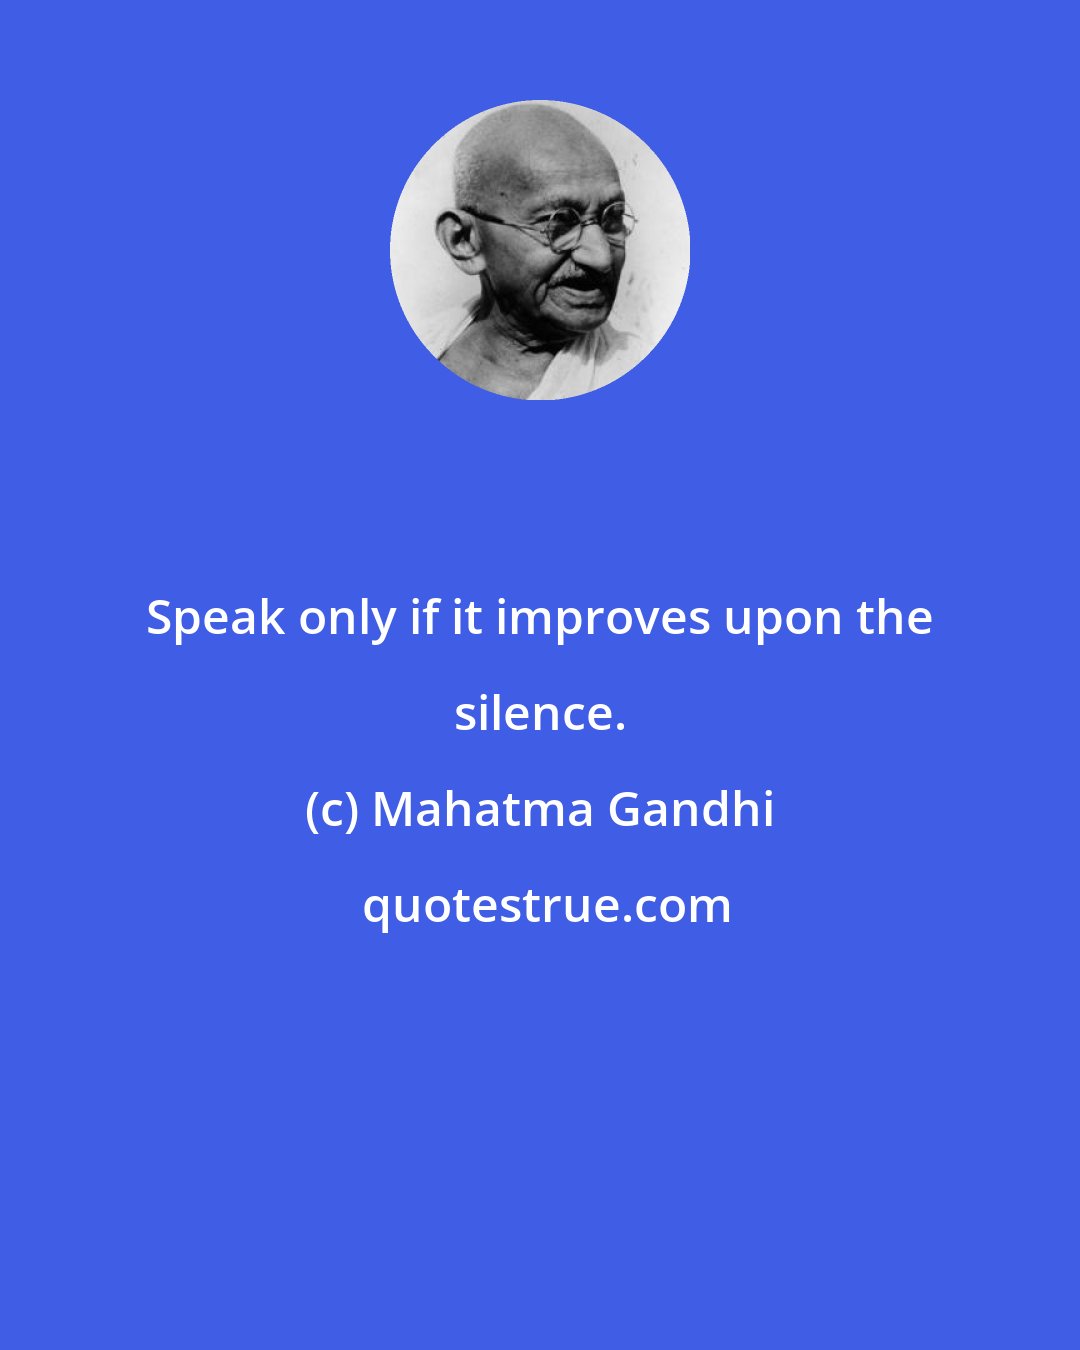 Mahatma Gandhi: Speak only if it improves upon the silence.